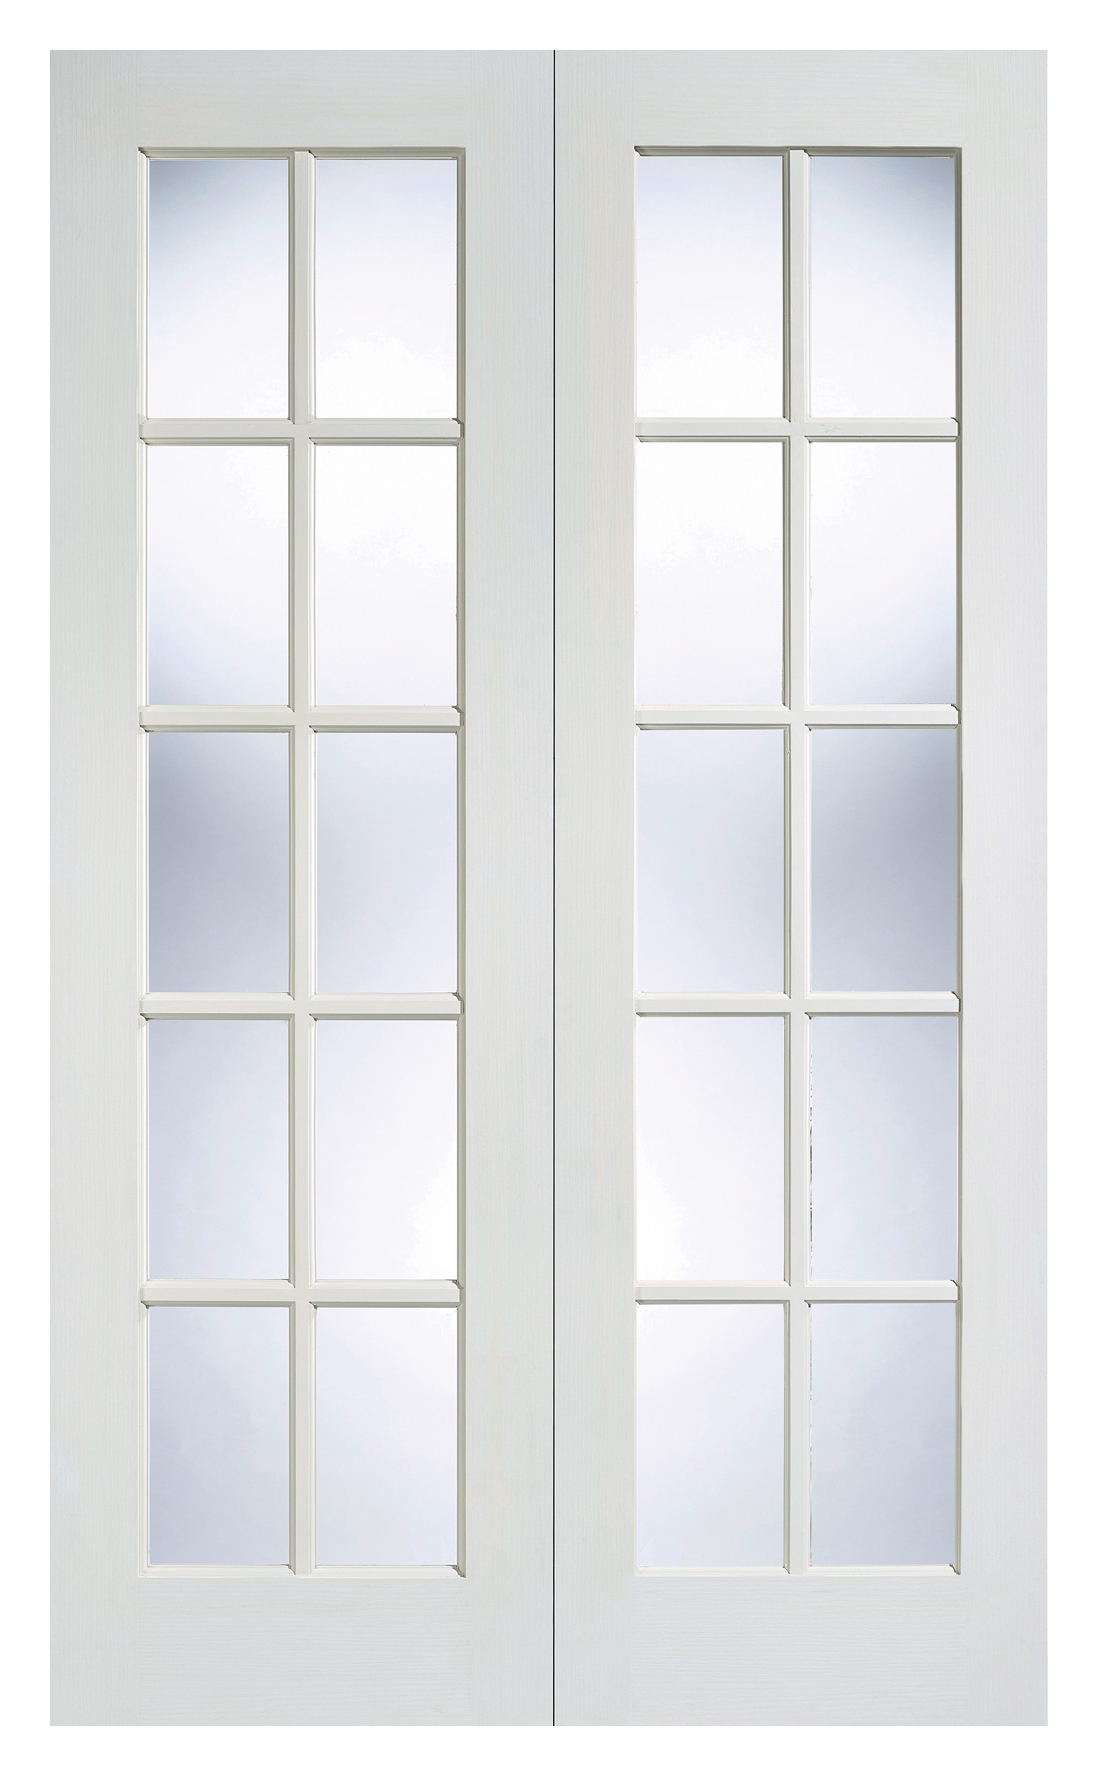 LPD Internal GTPSA Clear Glazed Primed White Door - 1981mm